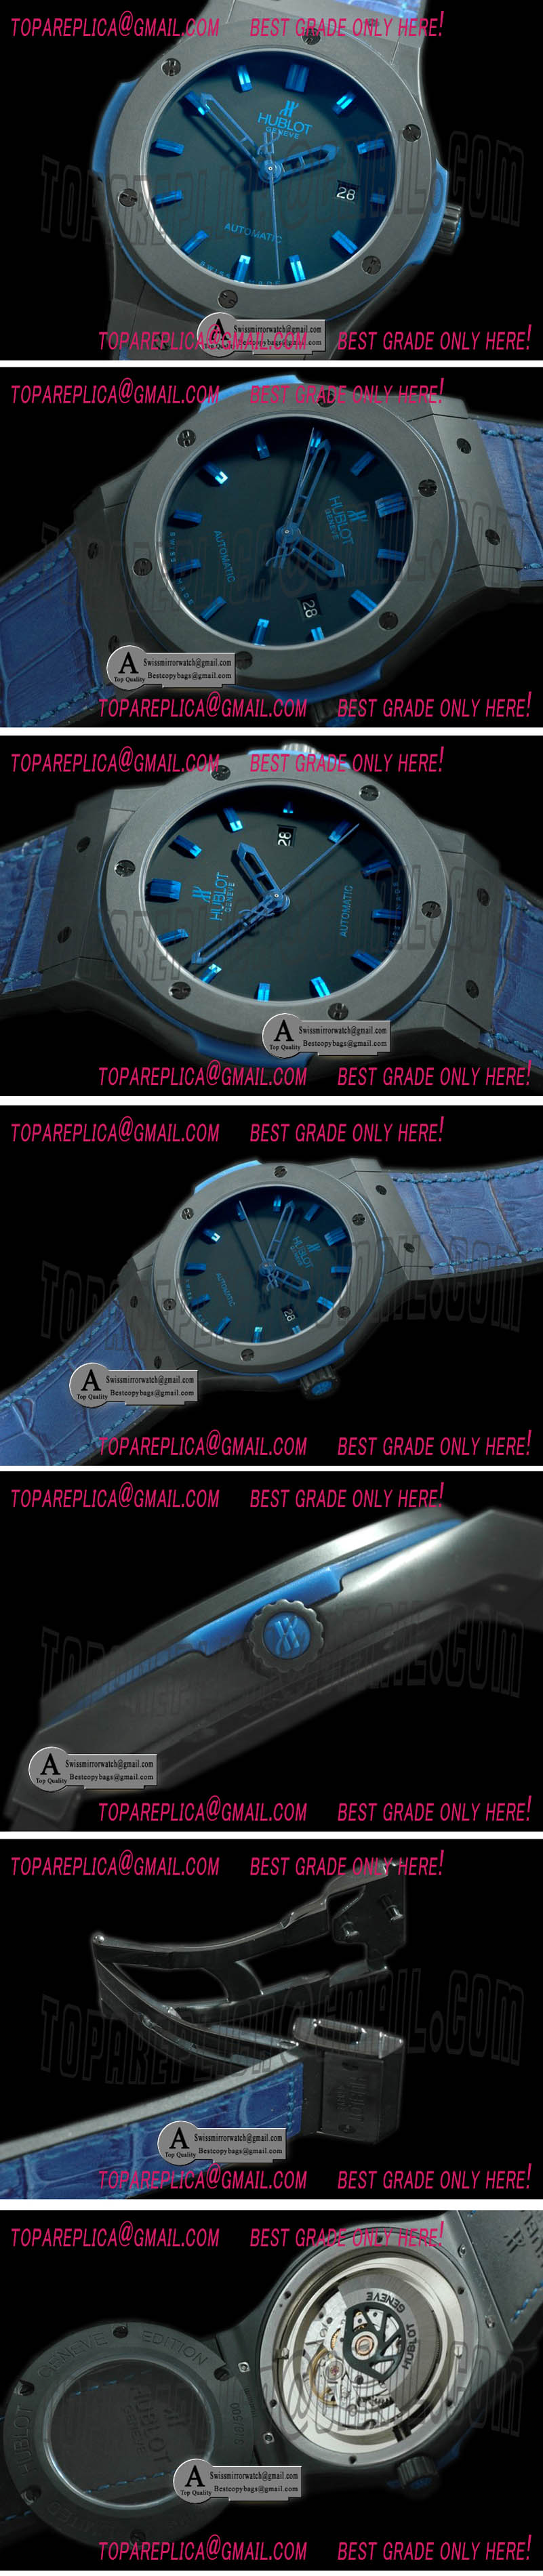 Hublot Classic Fusion CER/Rubber Black/Blue A-2824 Replica Watches